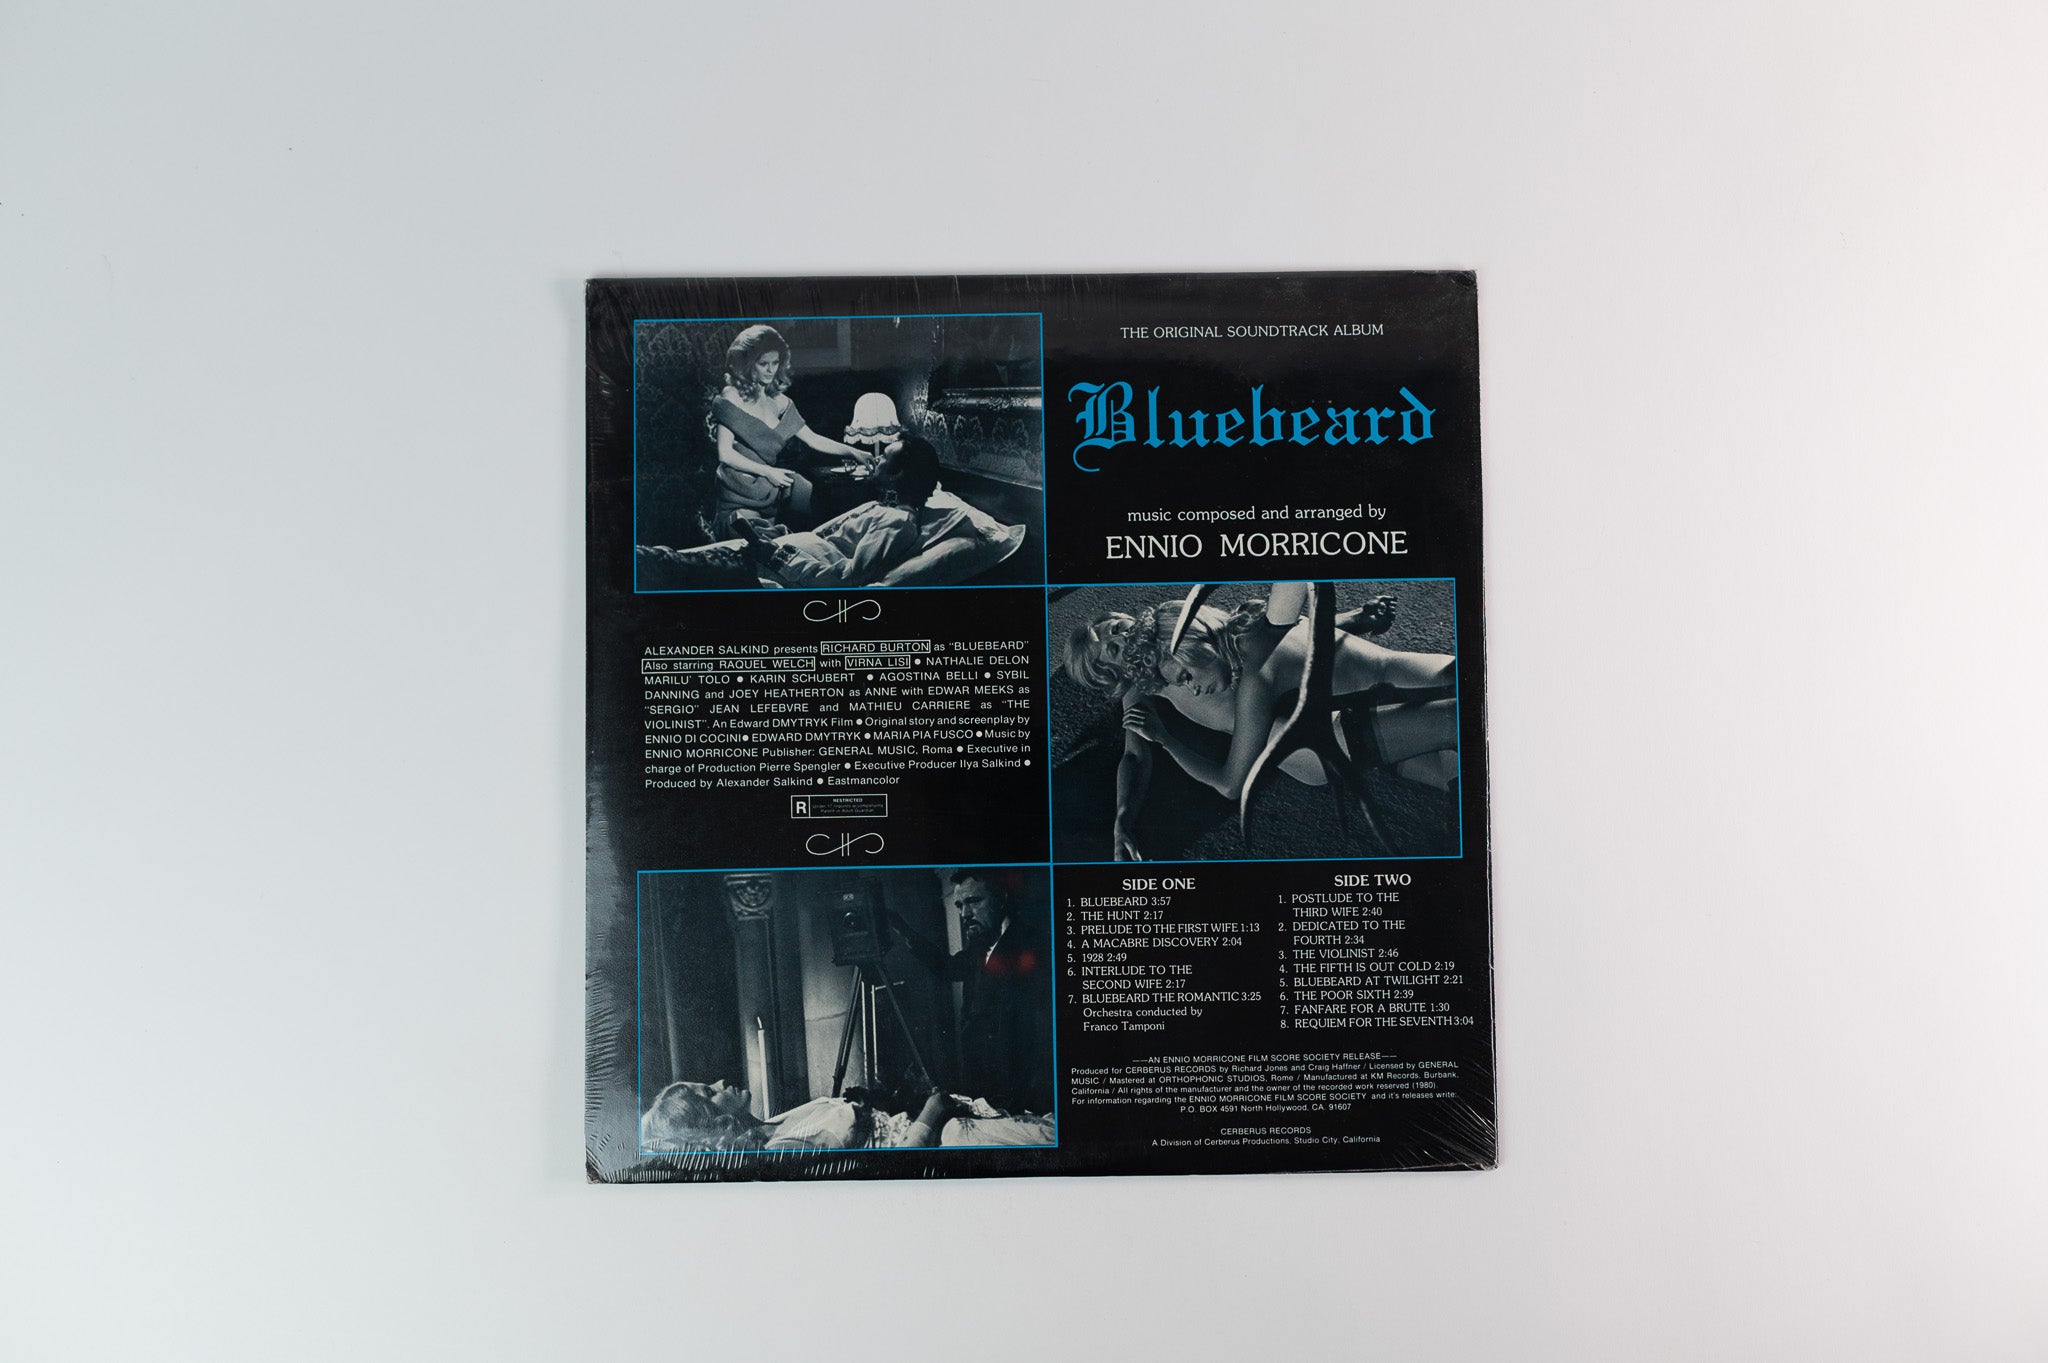 Ennio Morricone - Bluebeard (The Original Soundtrack Album) on Cerberus Sealed